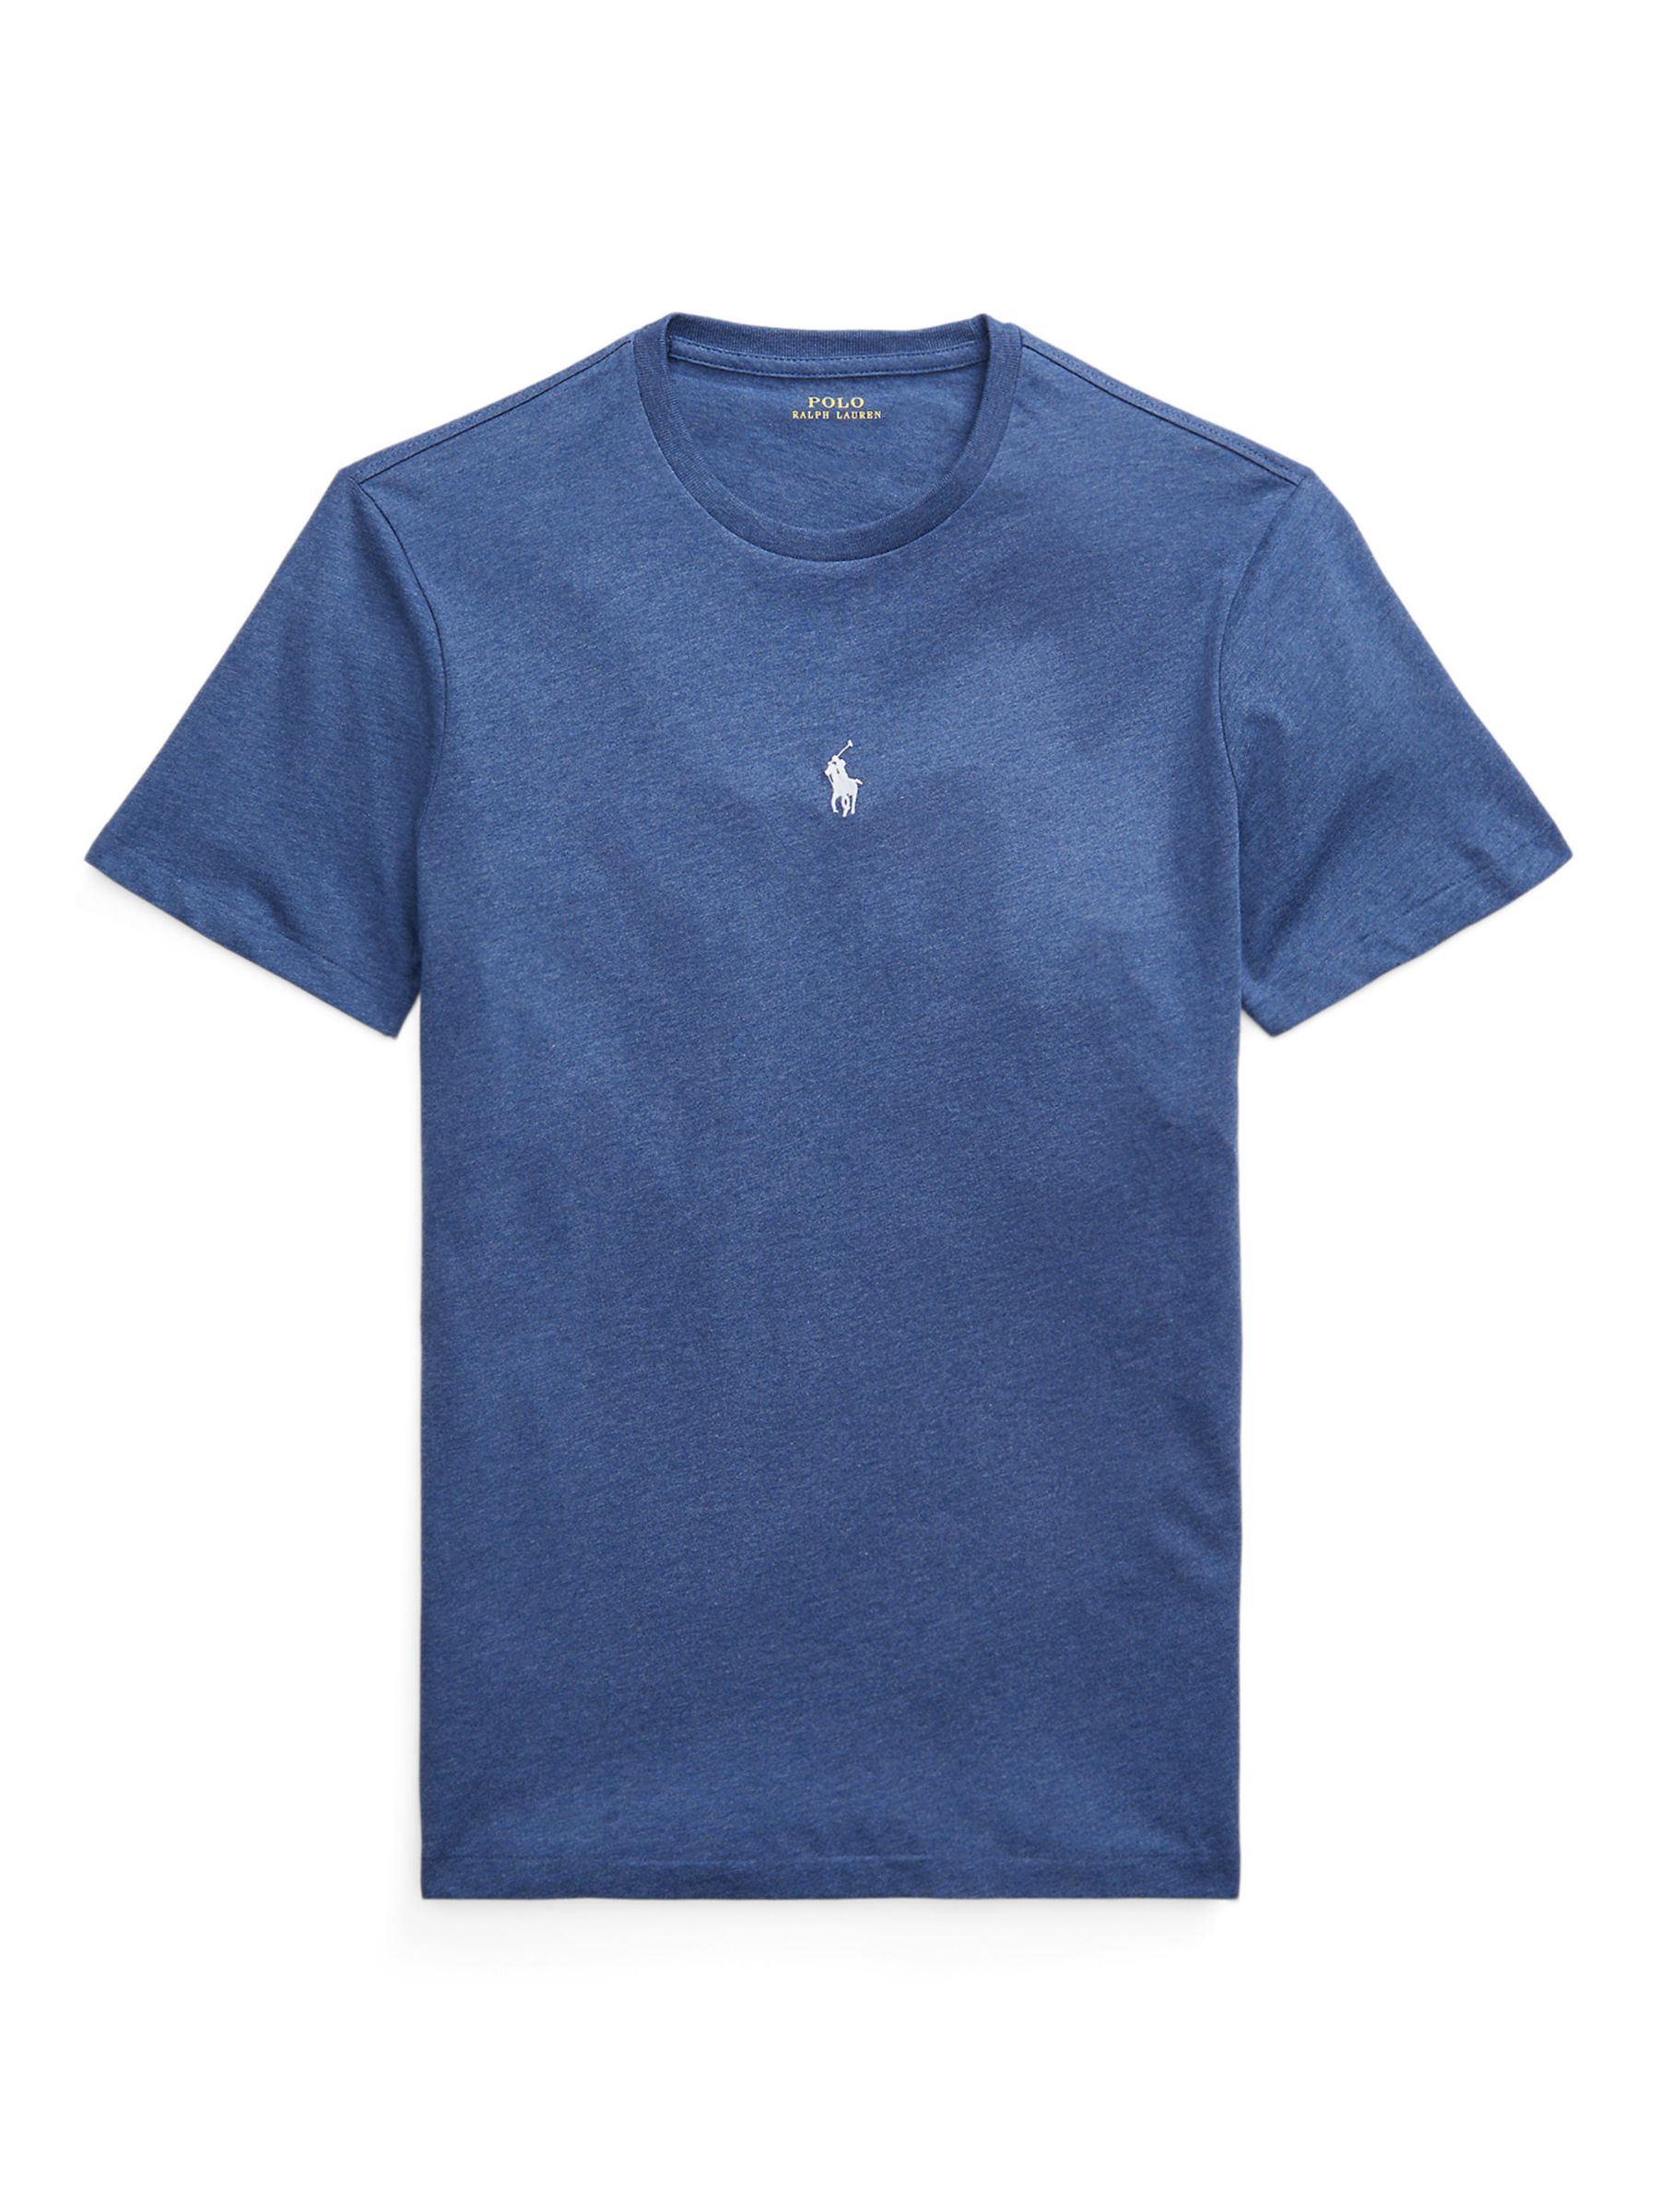 Buy Polo Ralph Lauren Slim Fit Jersey Crew Neck T-Shirt Online at johnlewis.com